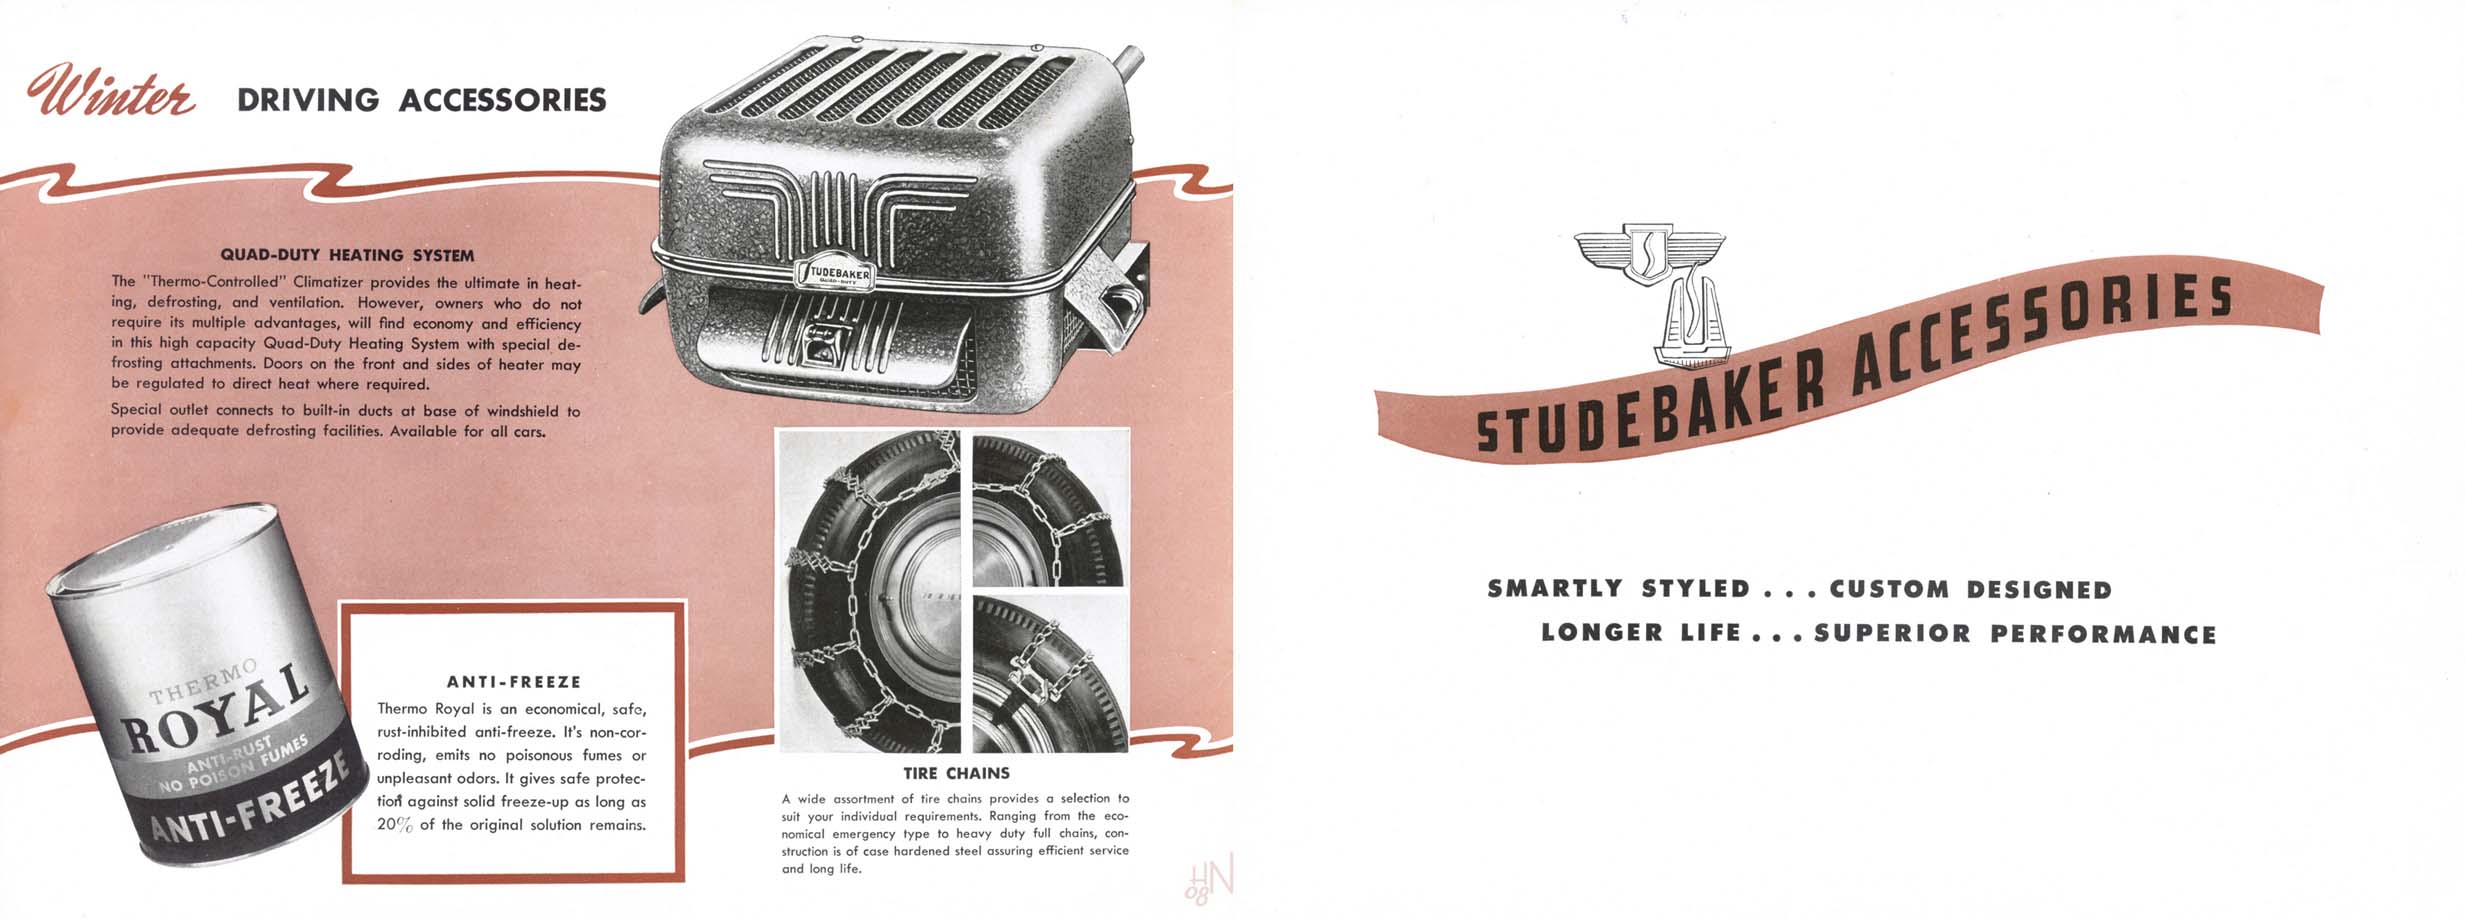 1947 Studebaker Accessories-18-19